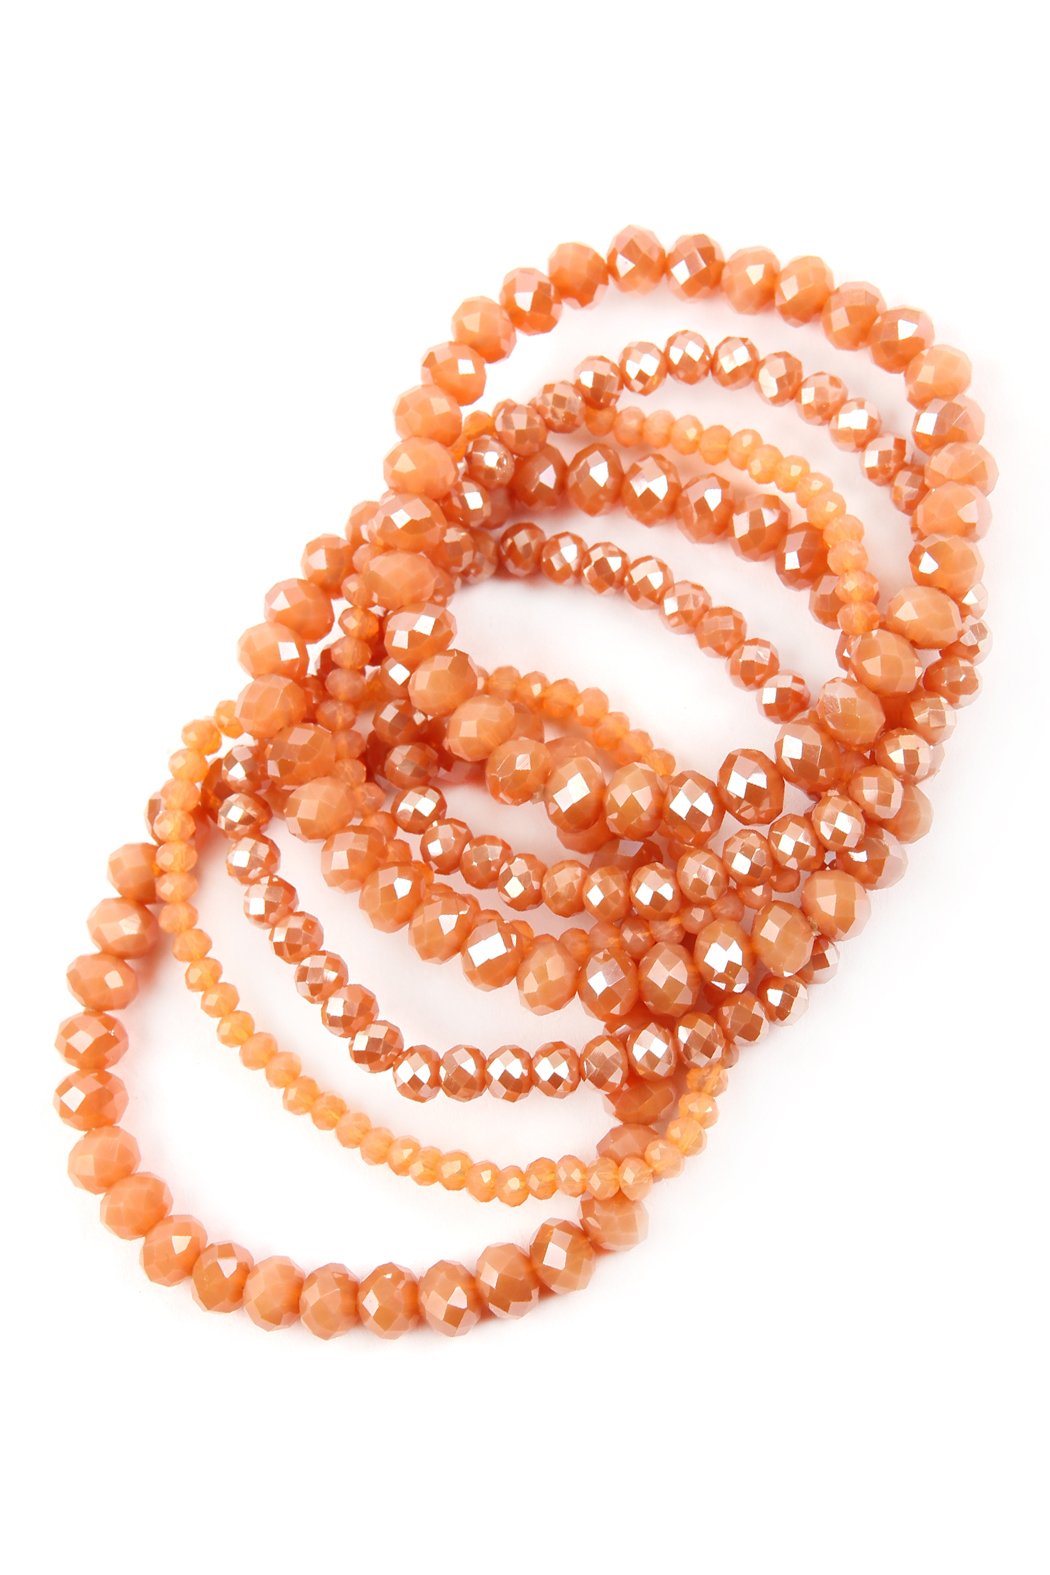 Hdb2750 - Seven Lines Glass Beads Stretch Bracelet